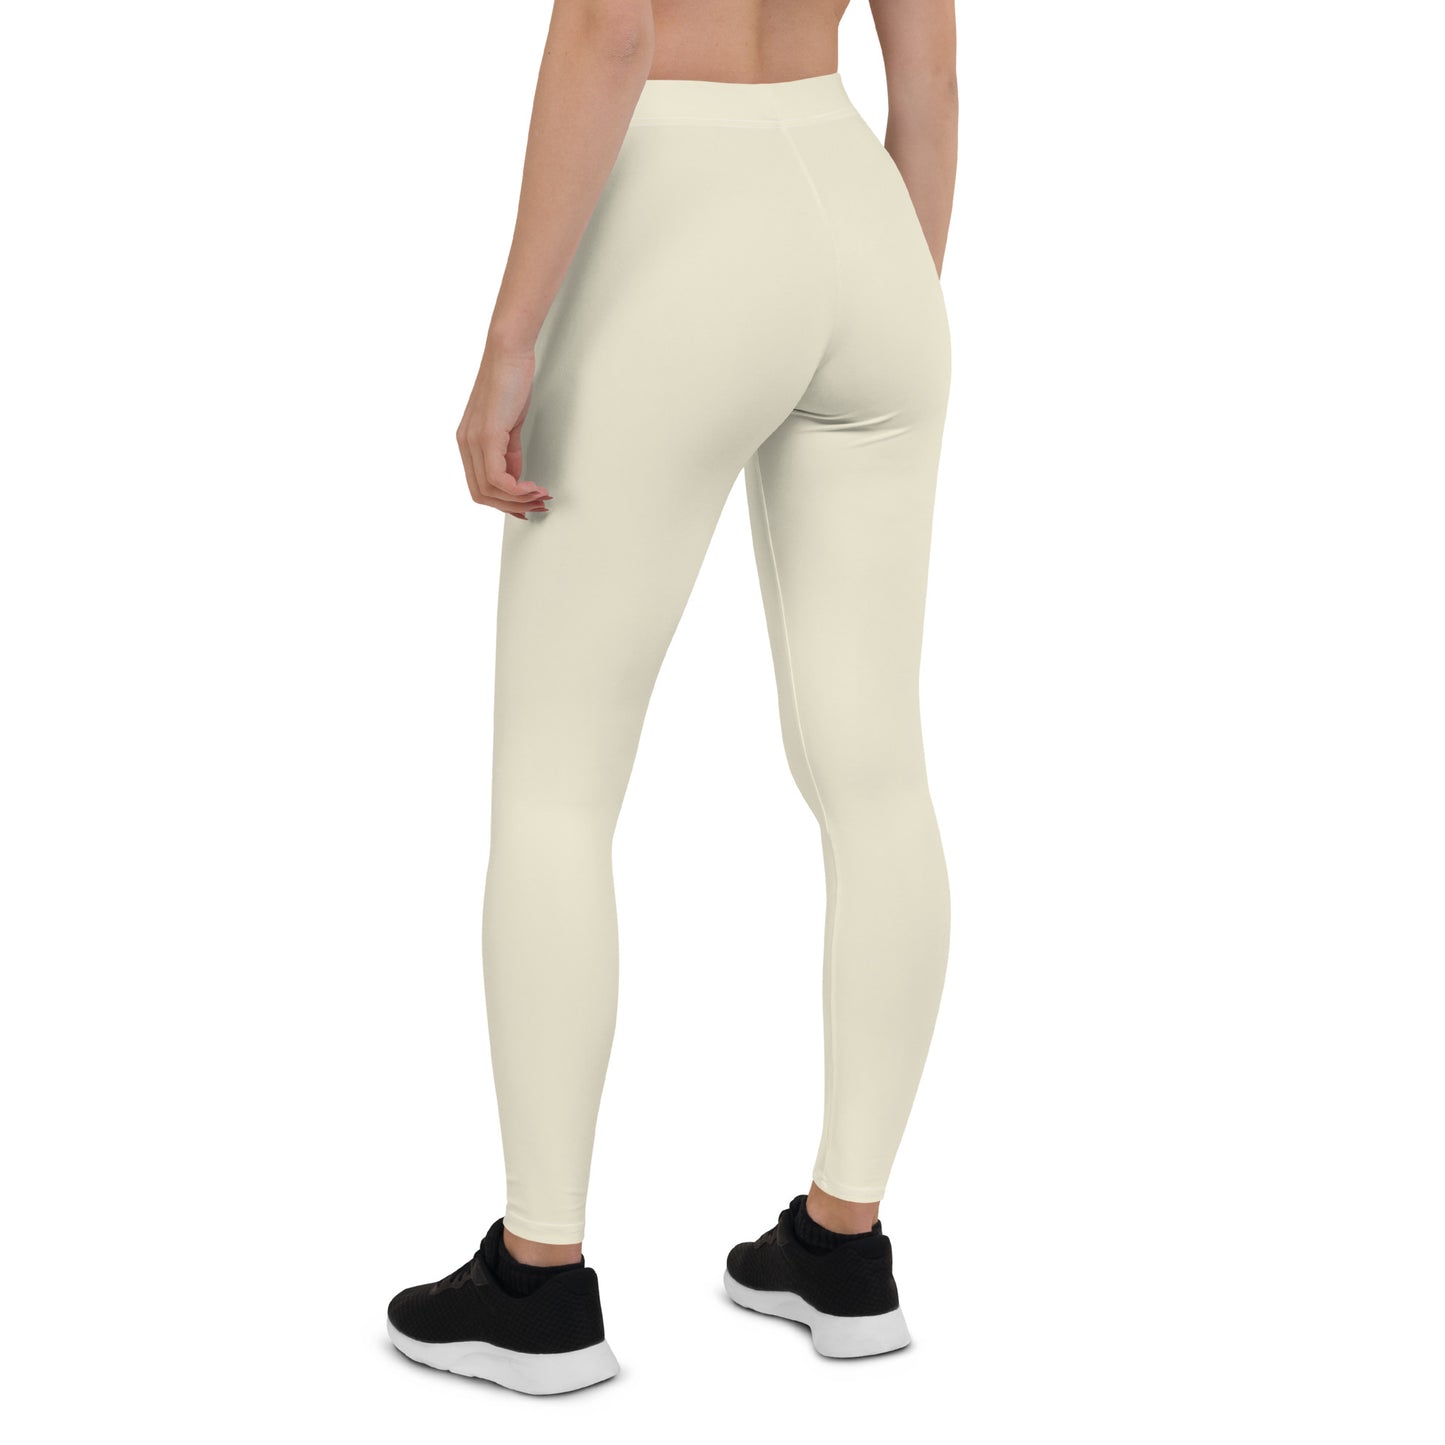 Humble Sportswear, women’s color match leggings, women’s spandex leggings, 7/8th leggings for women